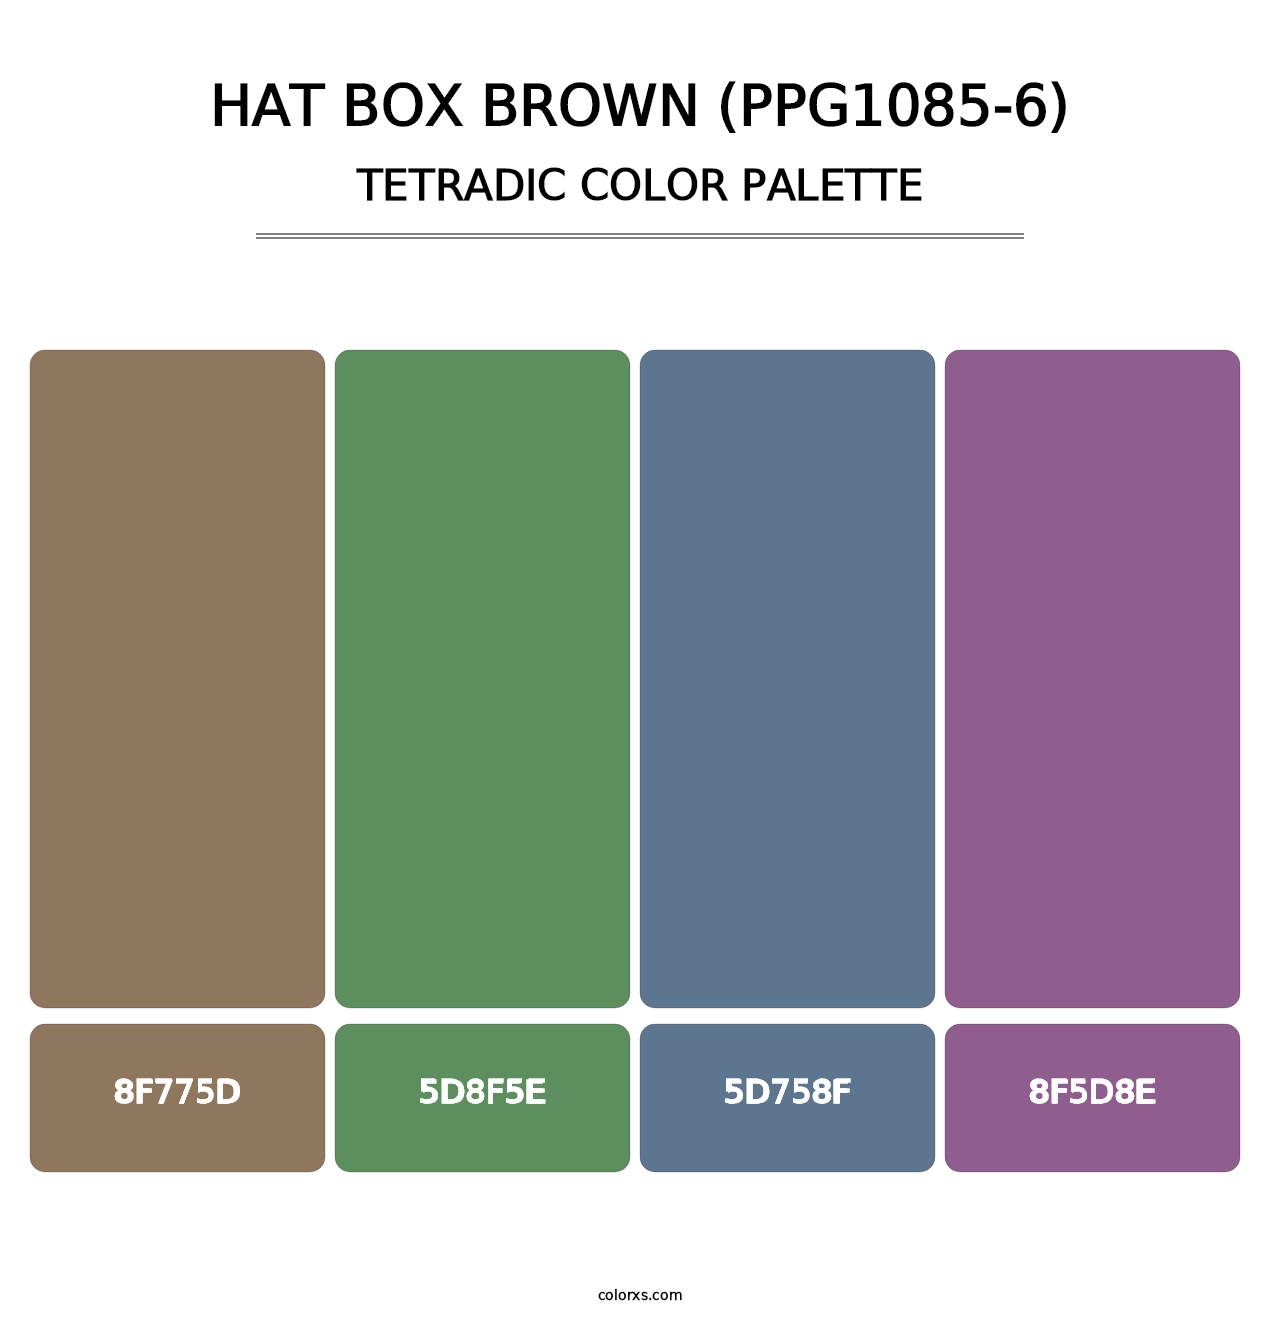 Hat Box Brown (PPG1085-6) - Tetradic Color Palette